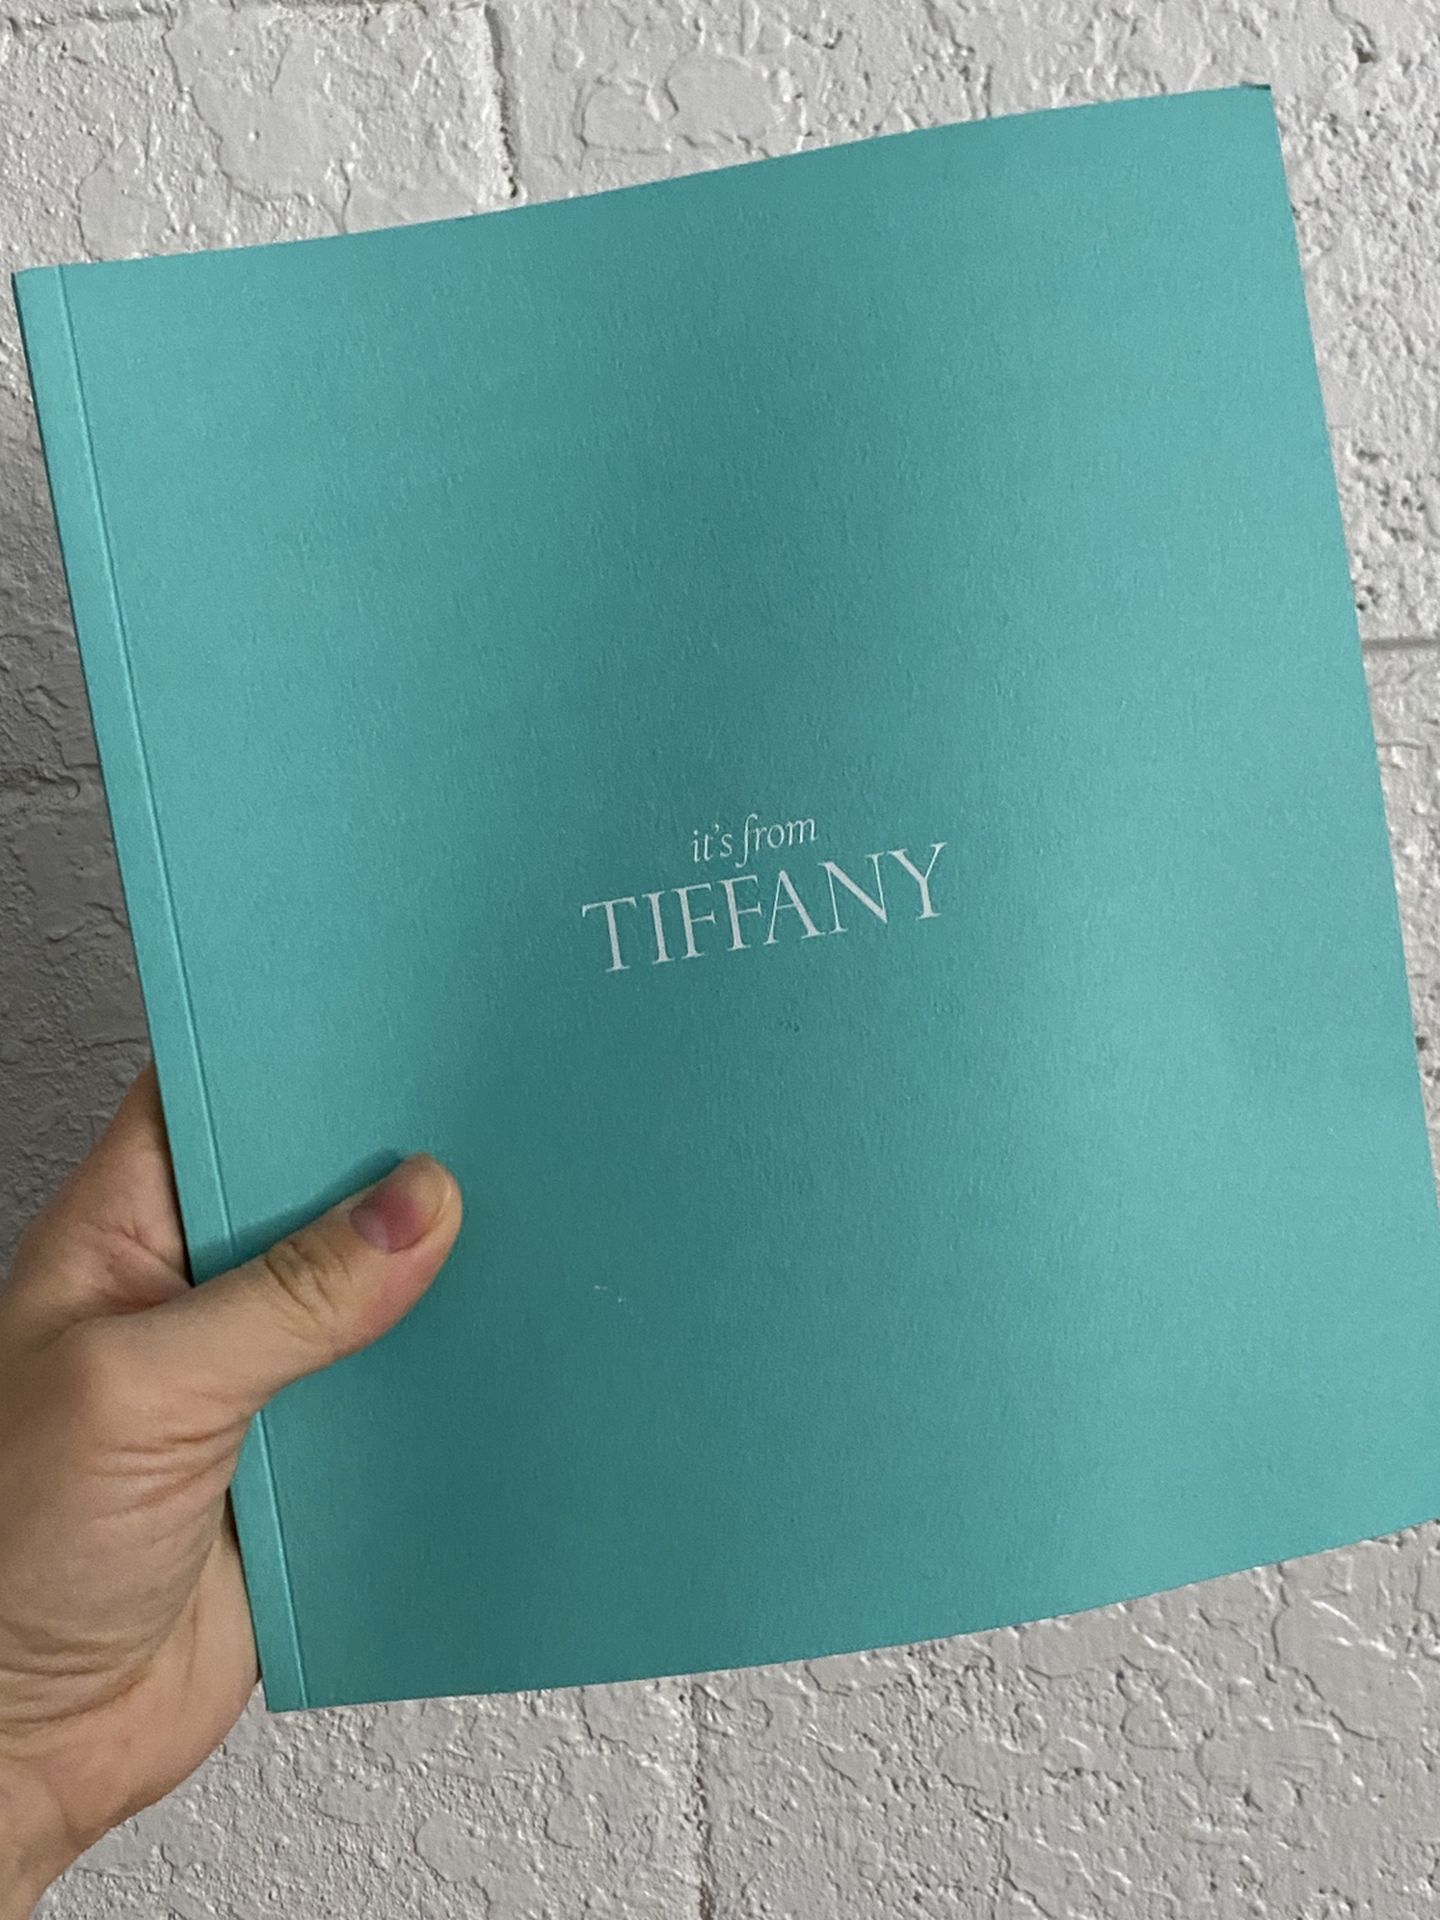 Tiffany Blue Book Catalog Of Jewelry